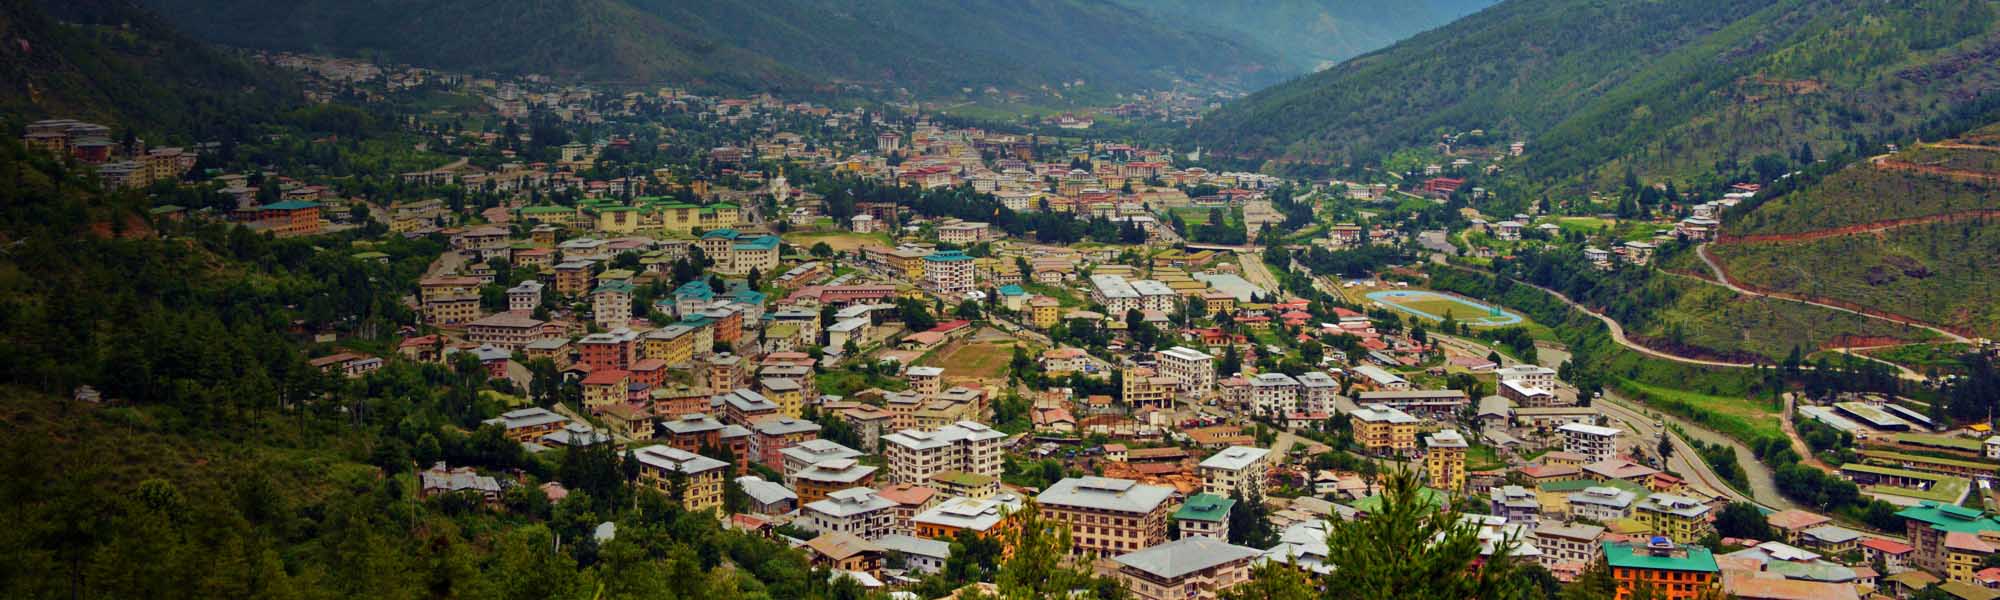 Thimphu Capital of Bhutan